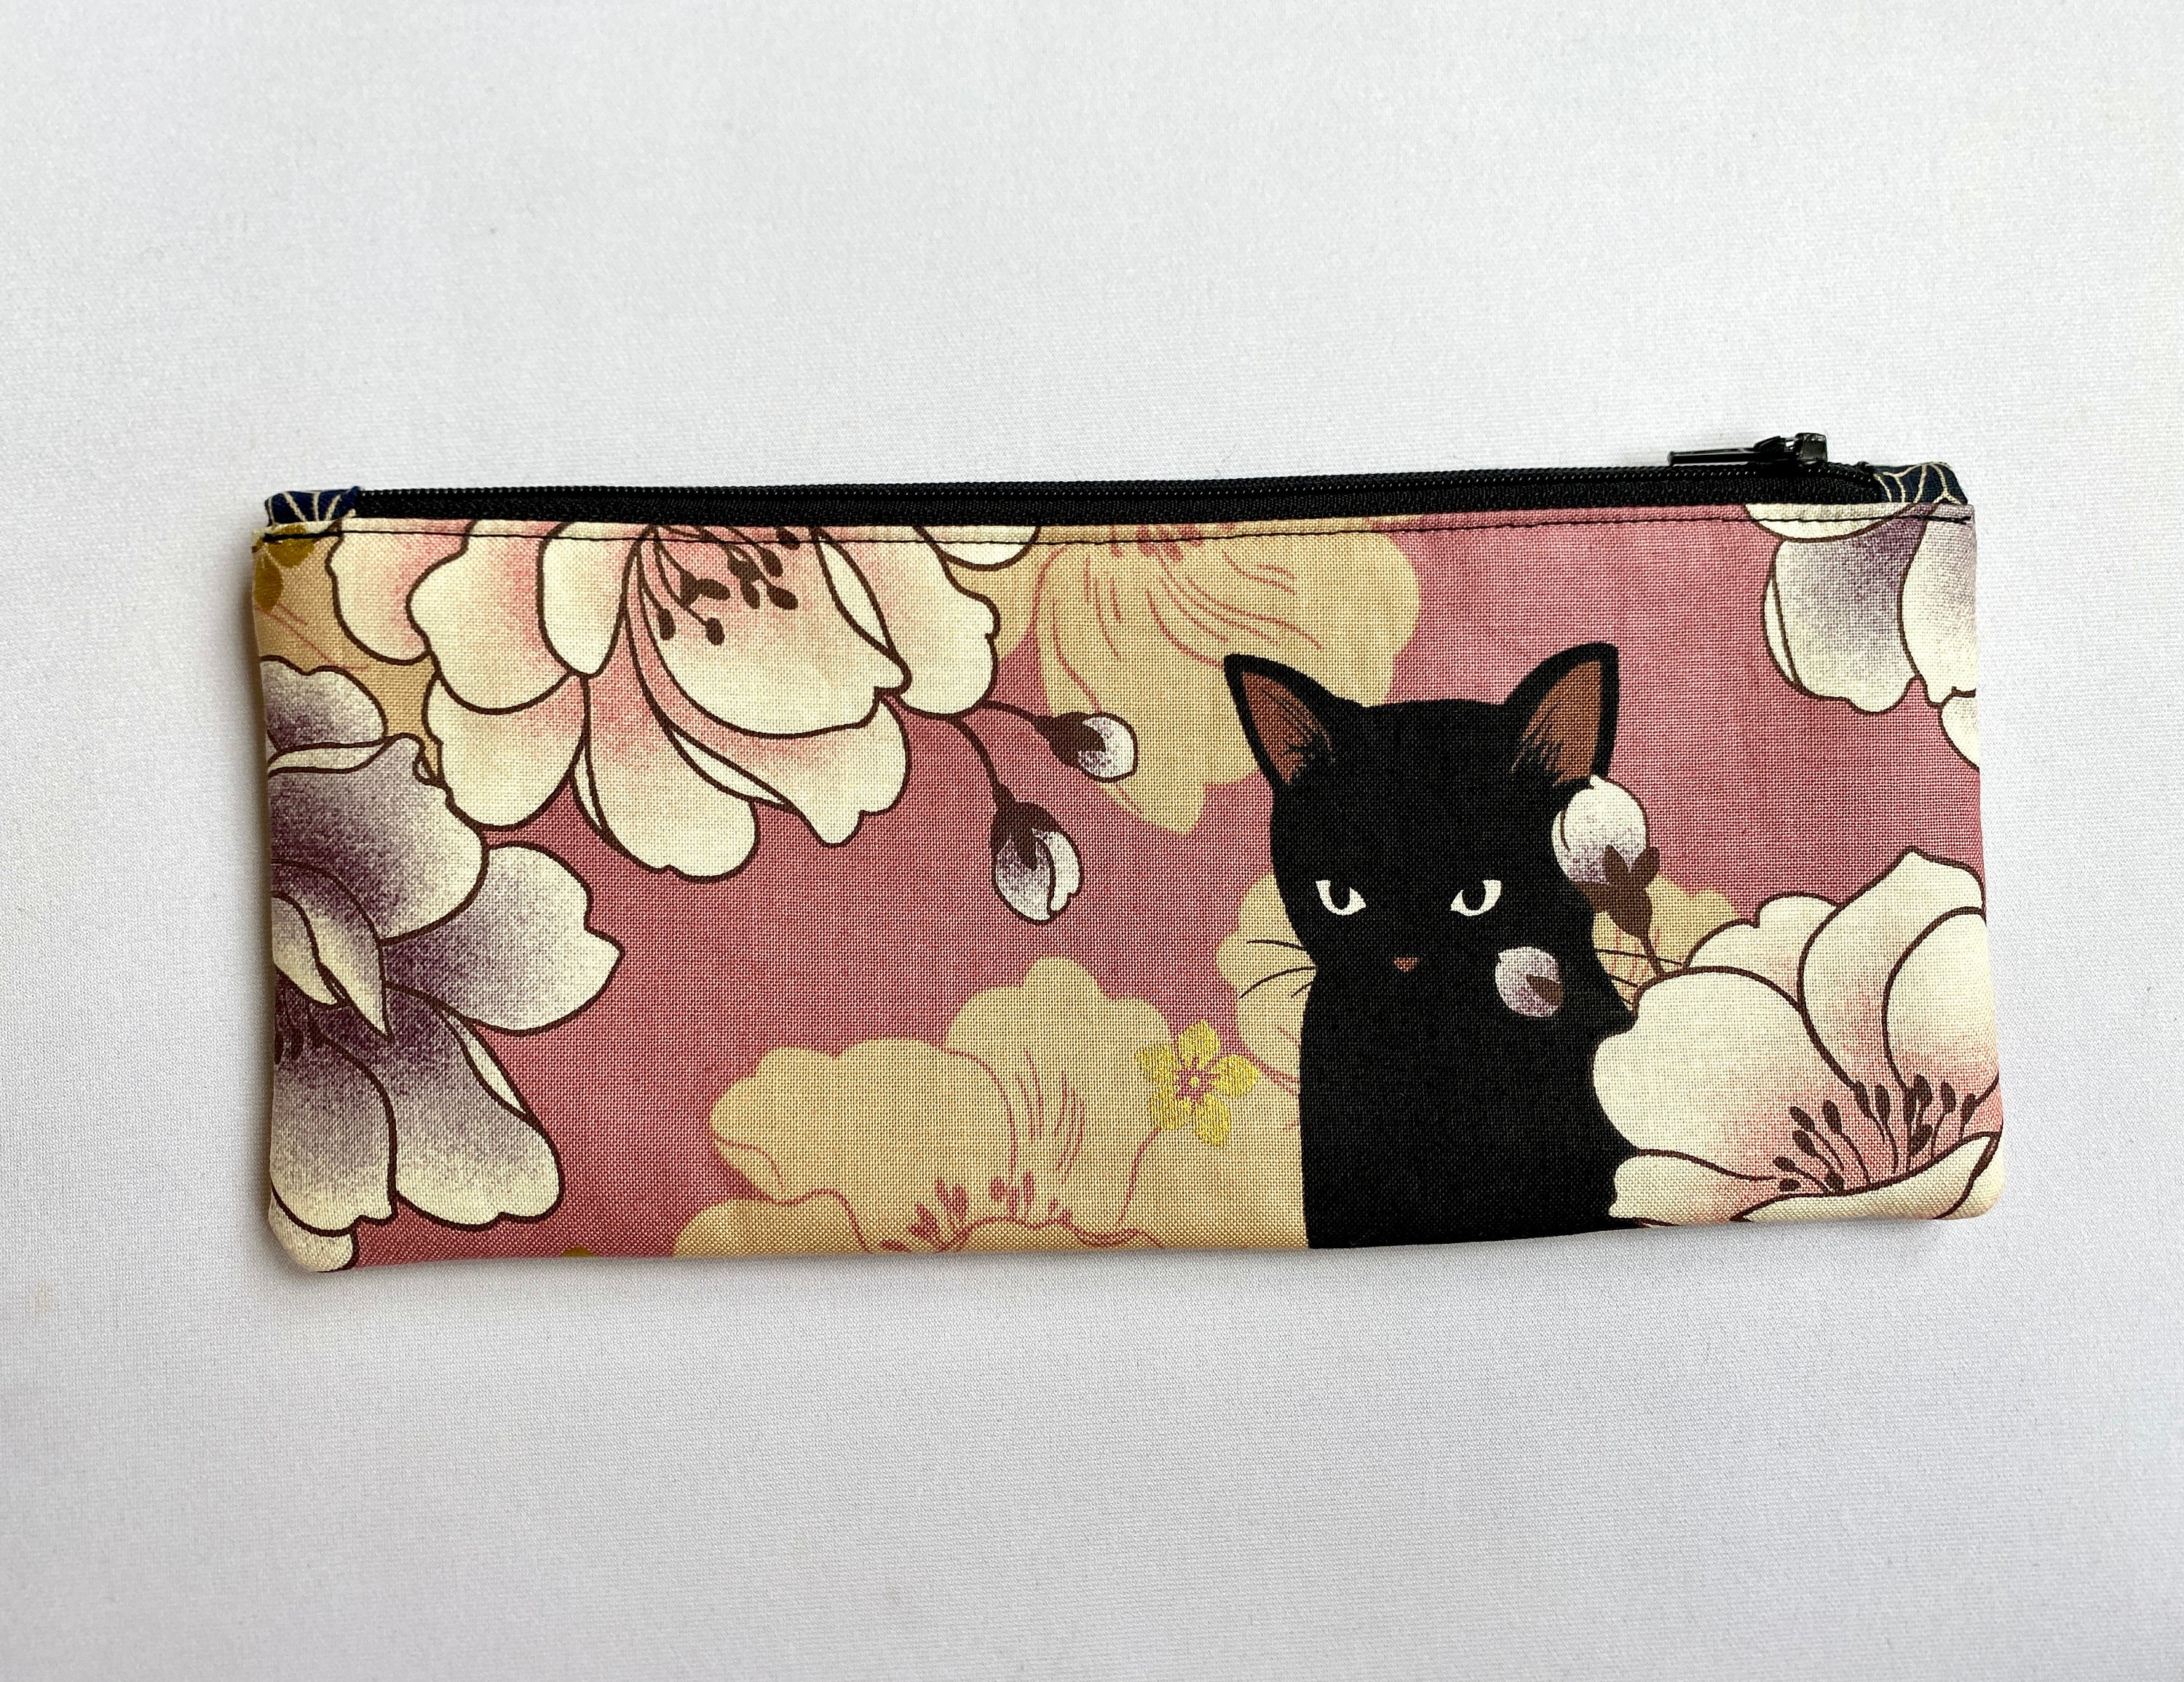 OUZPGAQ Cute Cat Pencil Case Slim Pink Triangle Pen Bag Kawaii Kitten Makeup Bag Pencil Pouch Small Cosmetics Bag Box Gadget Stationary Bag Gift for